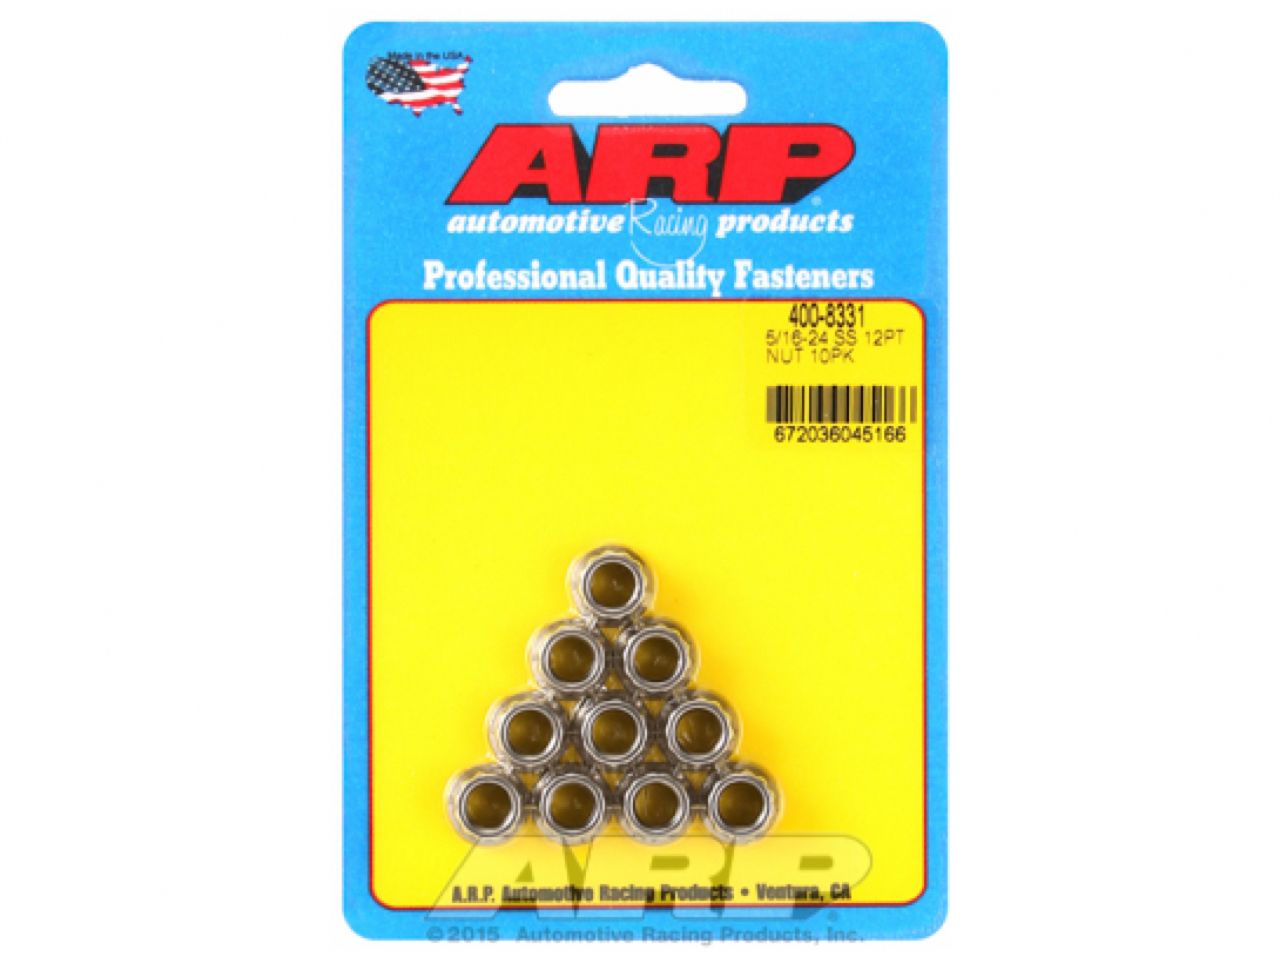 ARP Metric Nuts 400-8331 Item Image